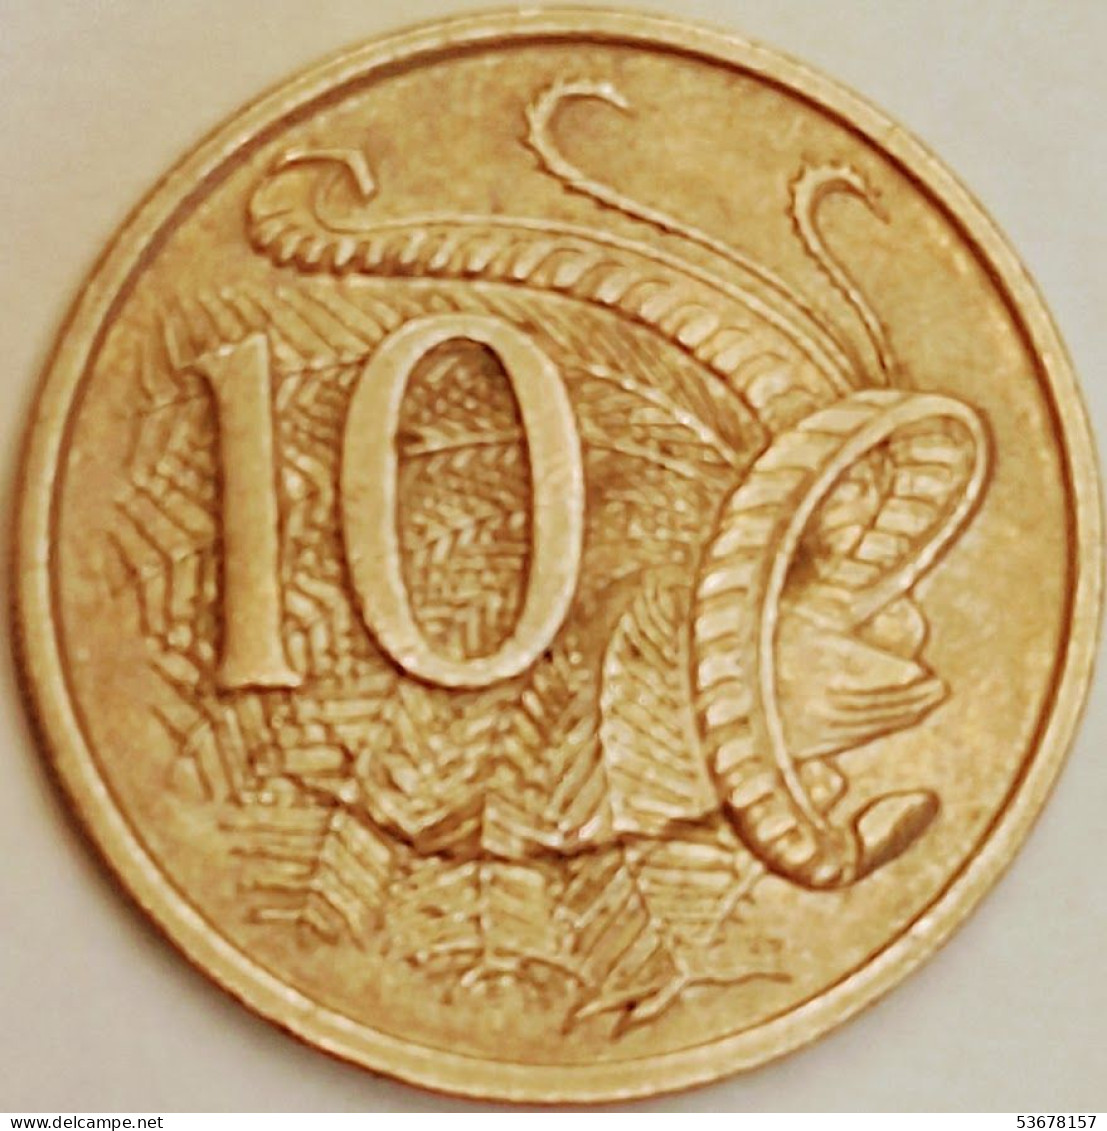 Australia - 10 Cents 1970, KM# 65 (#2806) - 10 Cents